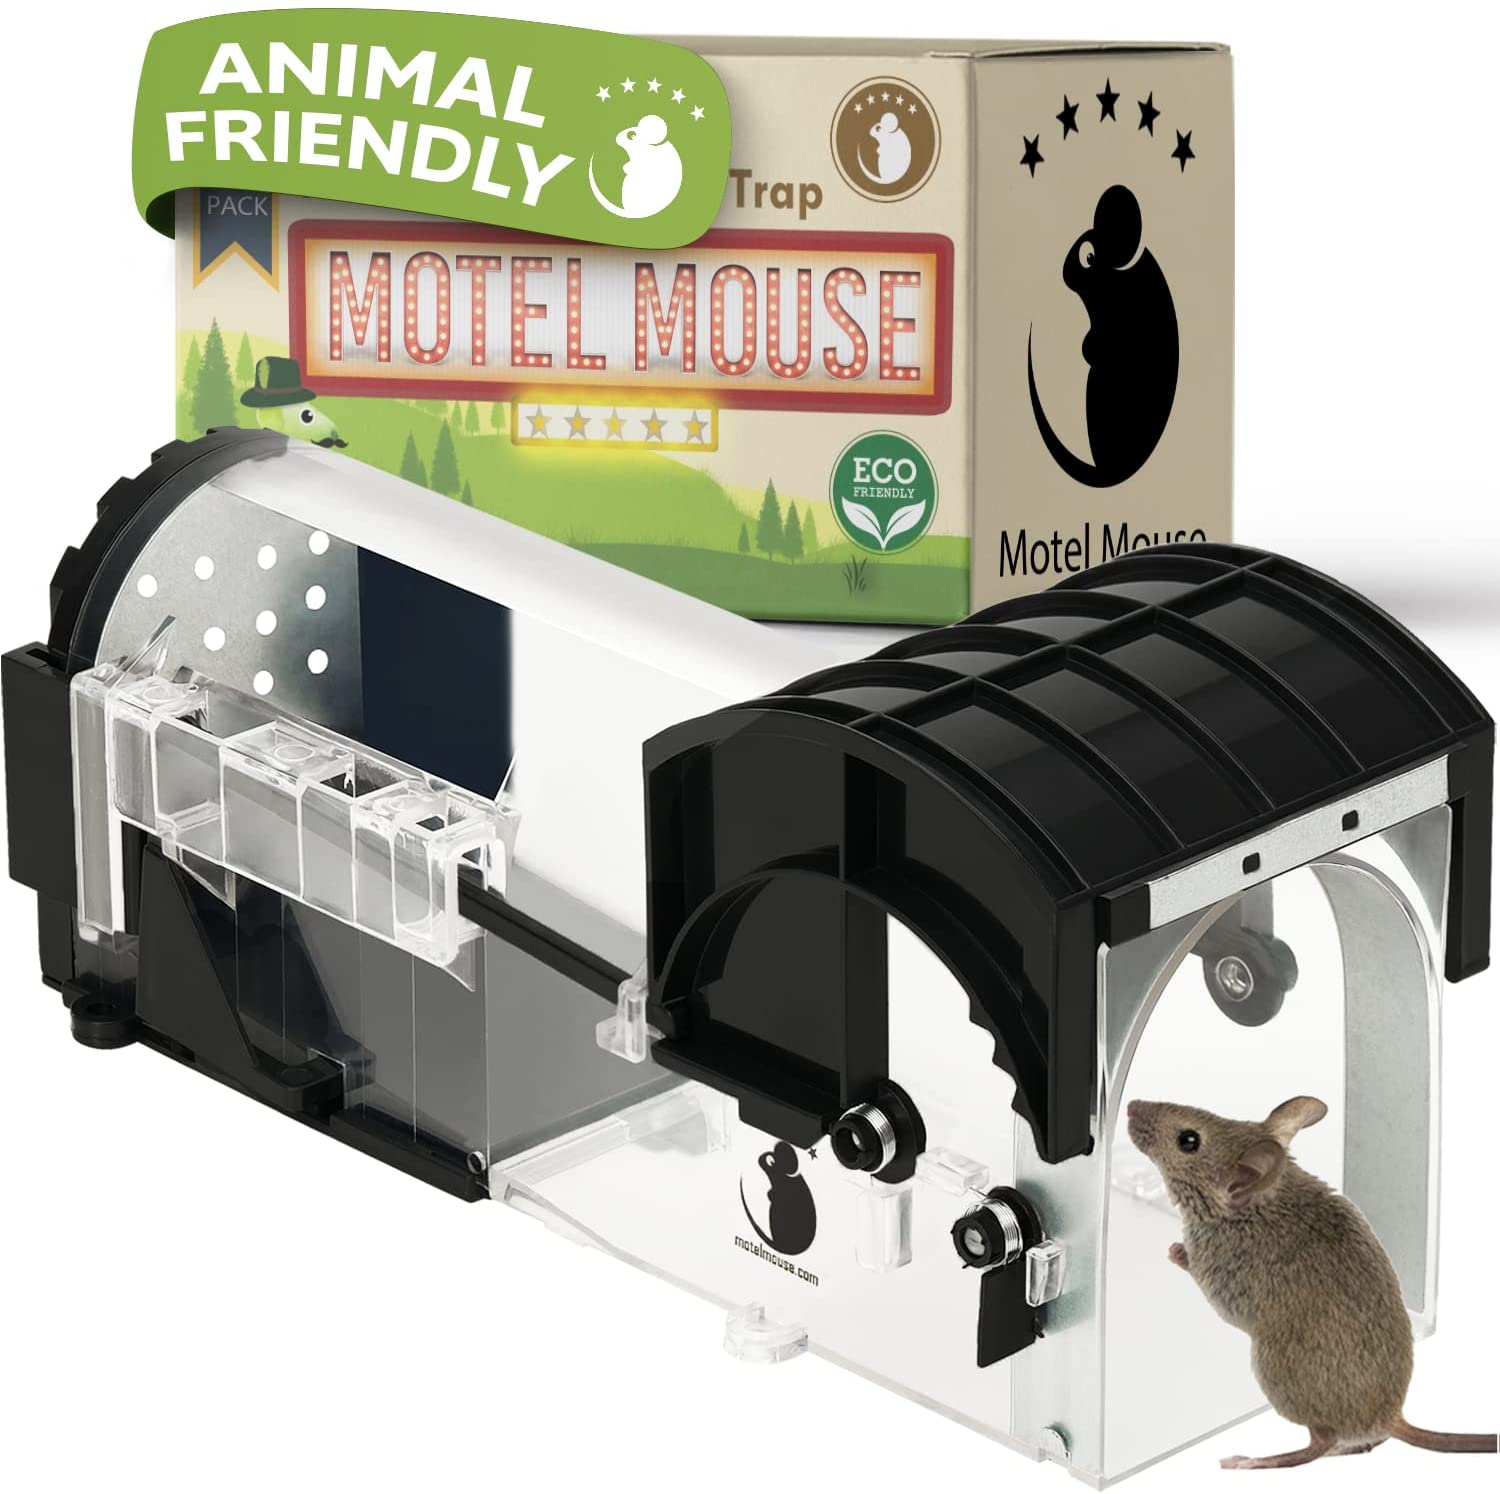 The Original Mouse Motel